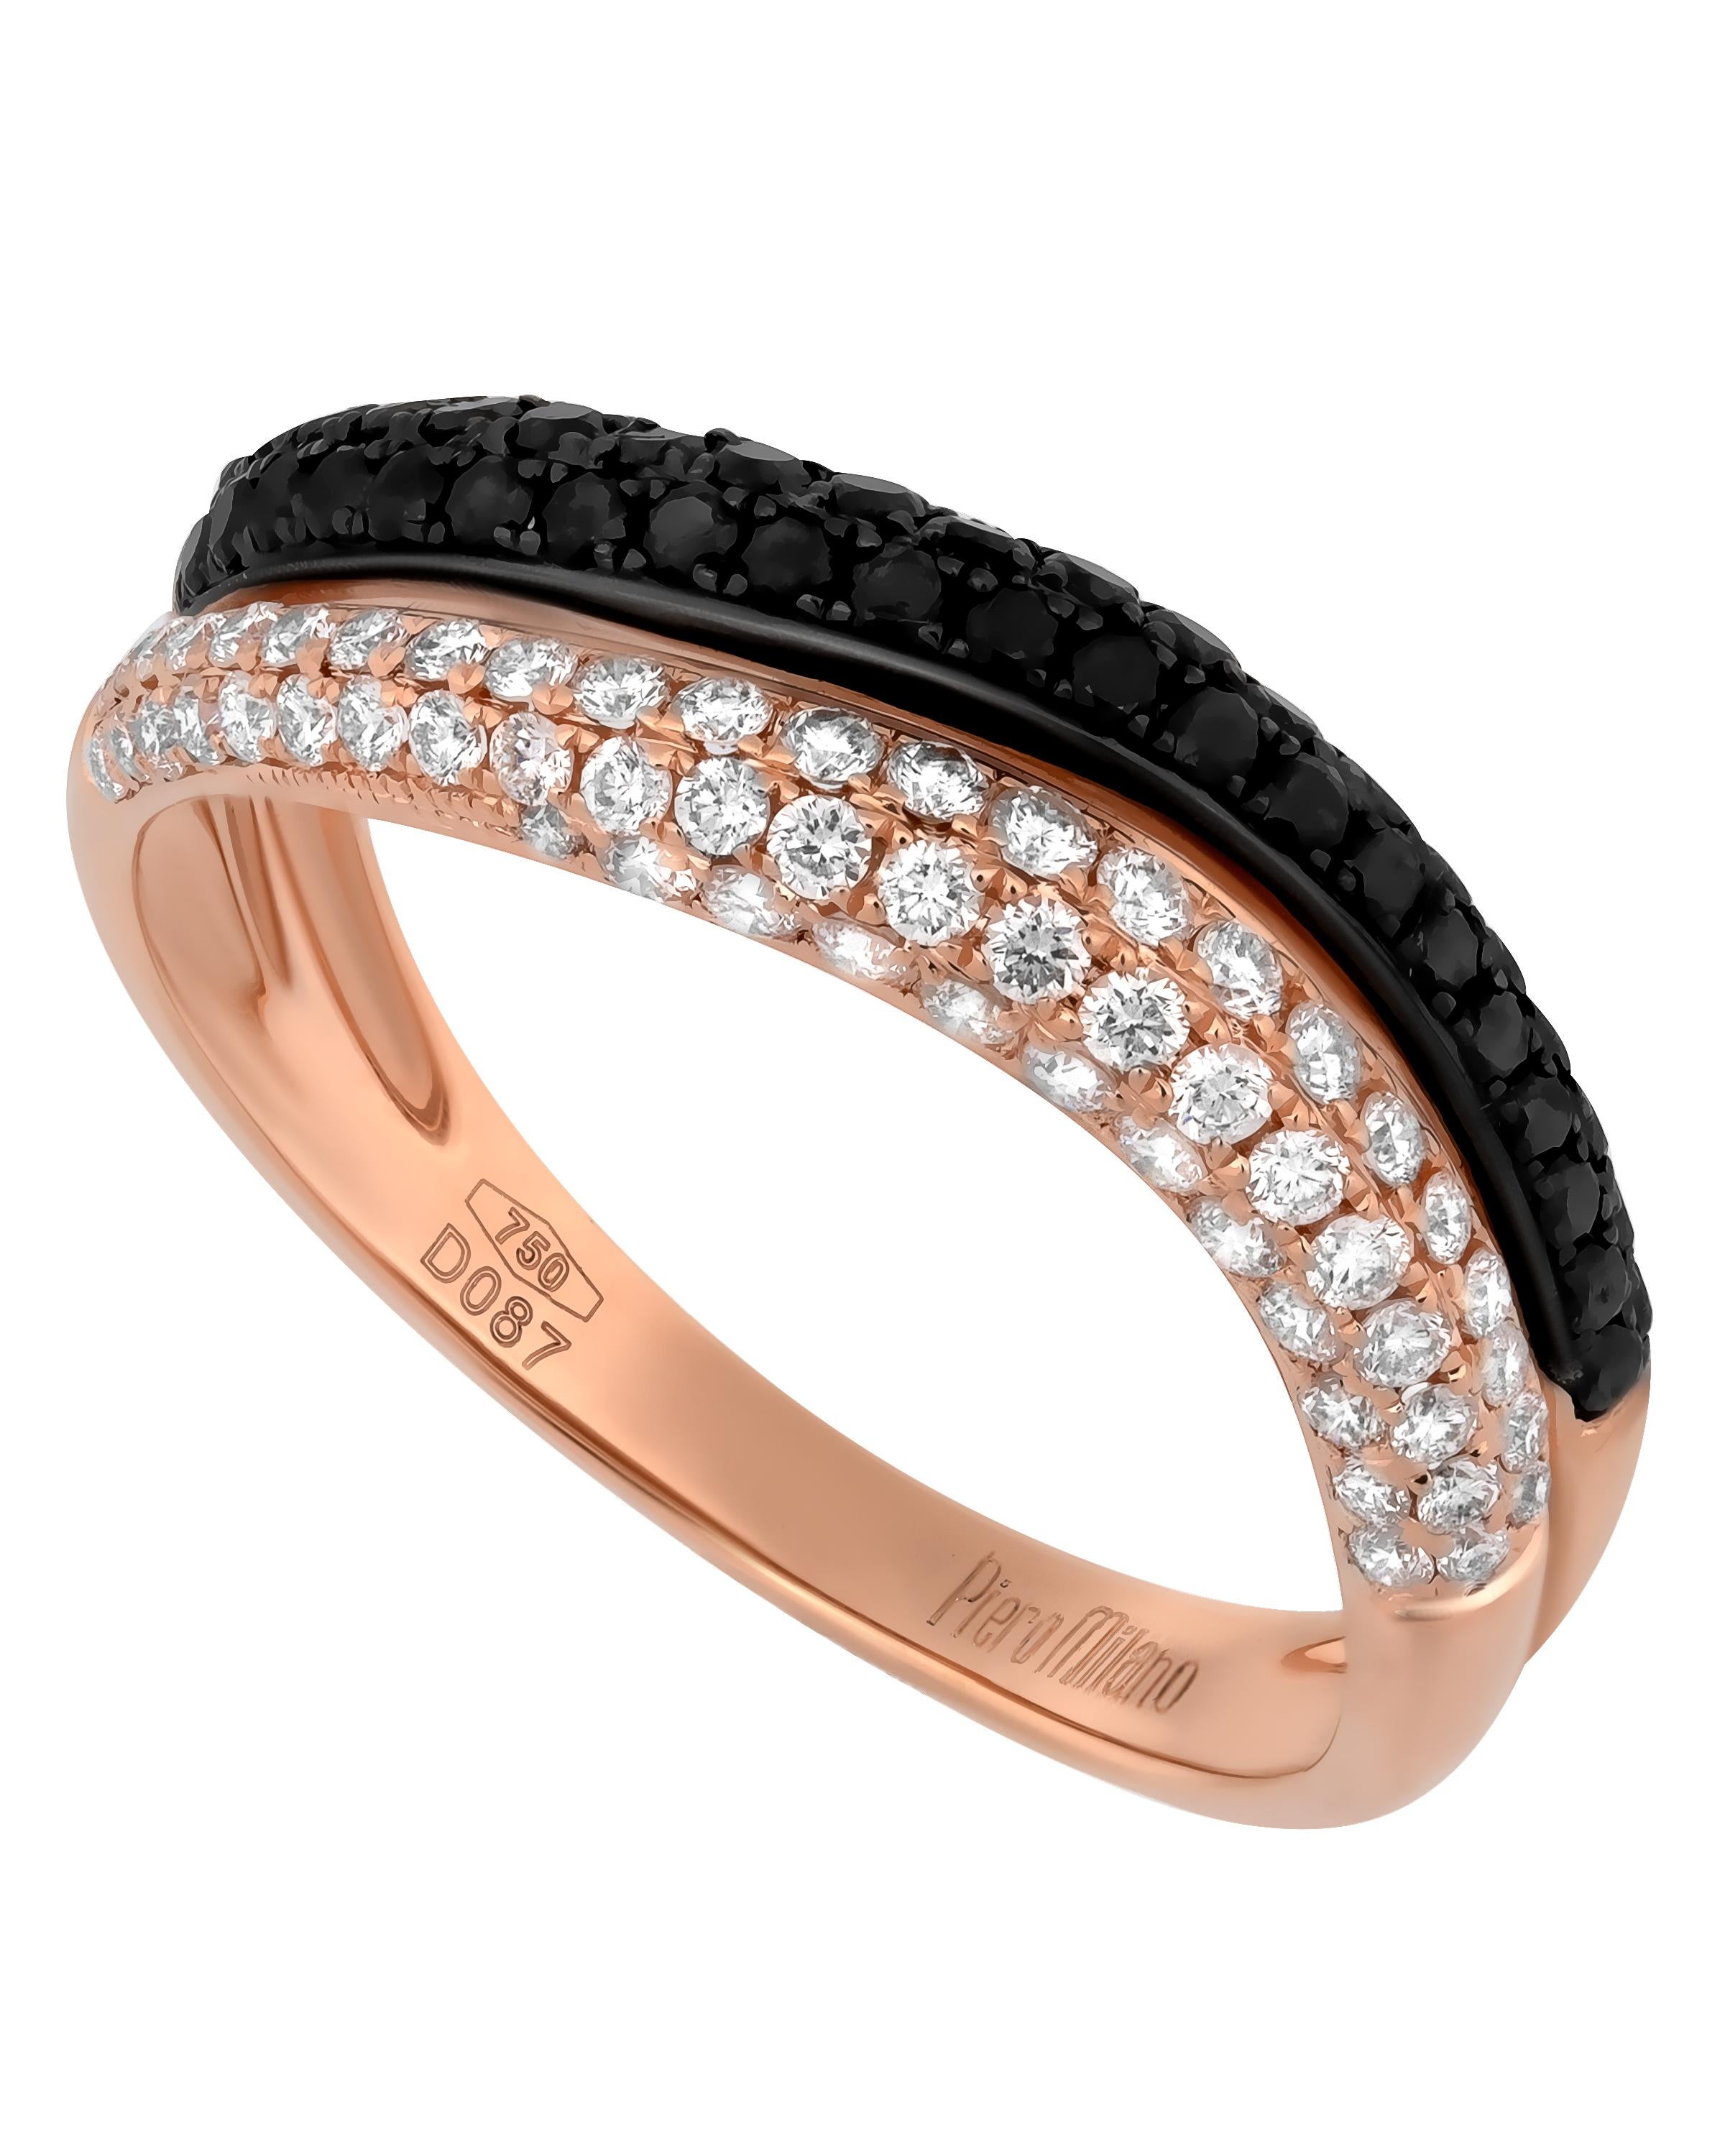 Contemporary Piero Milano 18K Rose Gold Diamond Ring Sz 7.75 For Sale